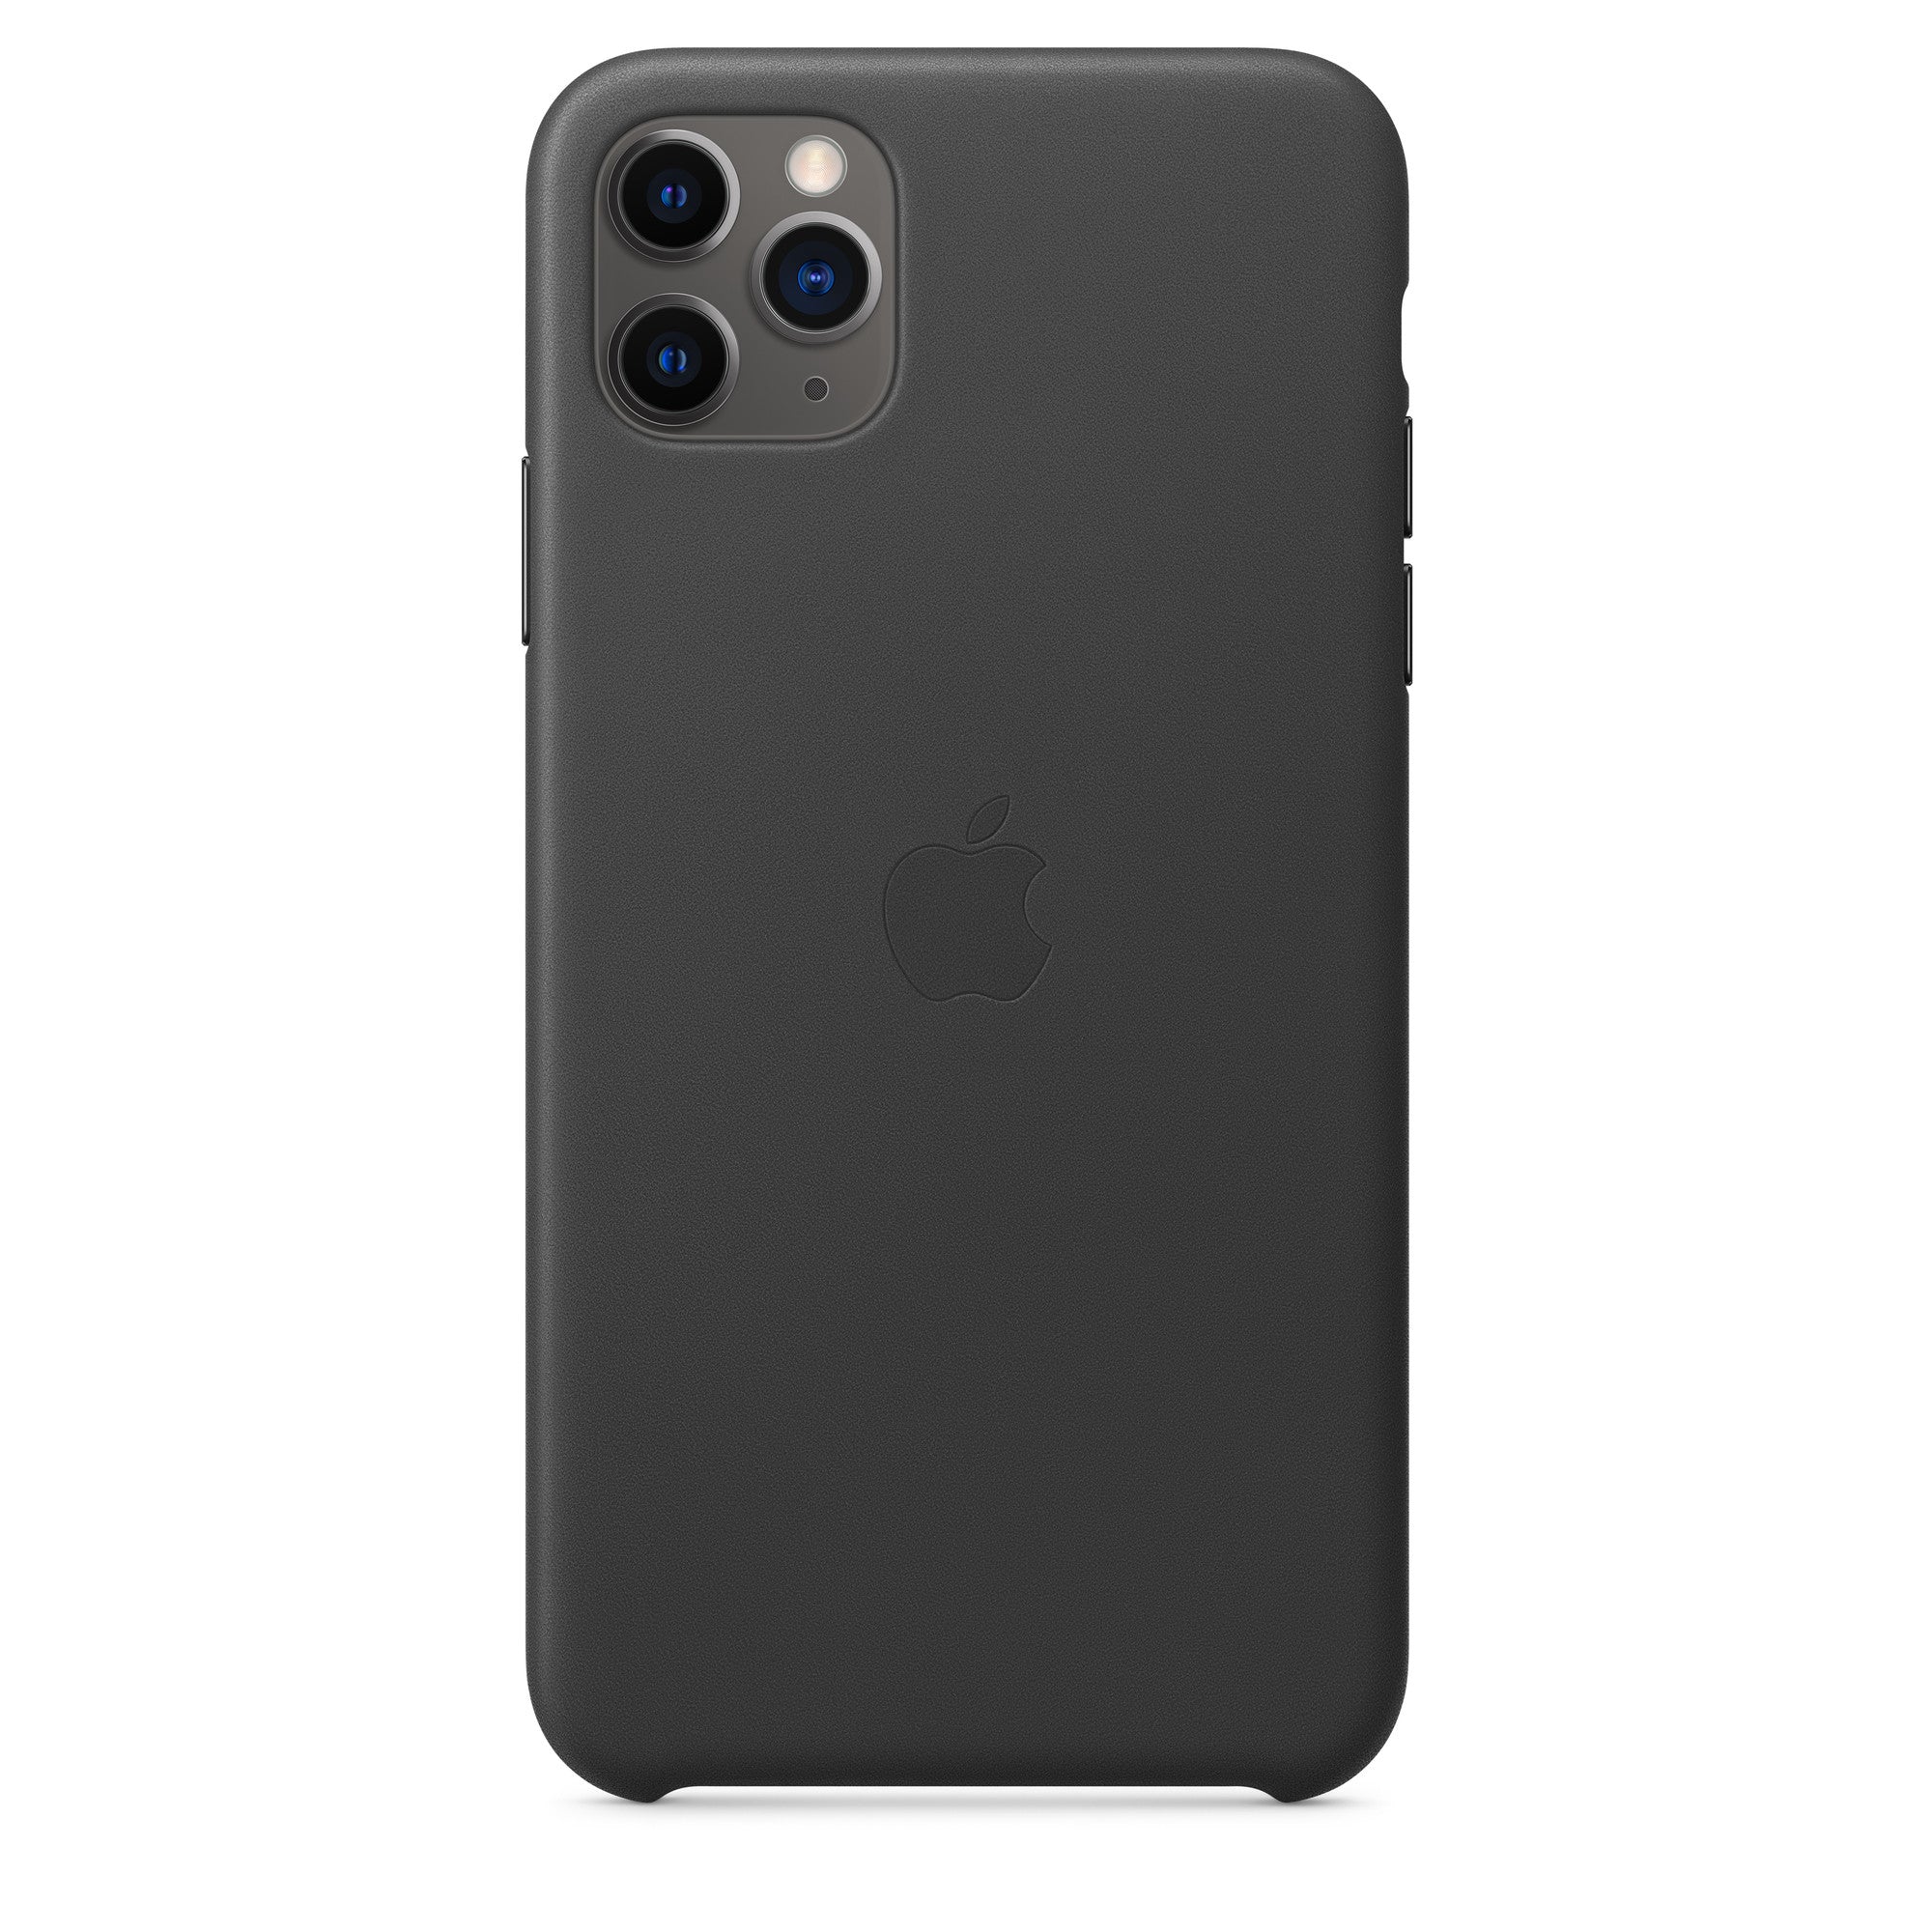 Apple iPhone 11 Pro Max Leather Case - Black  - Brand New iPhone Case Apple Black Black New - Sealed